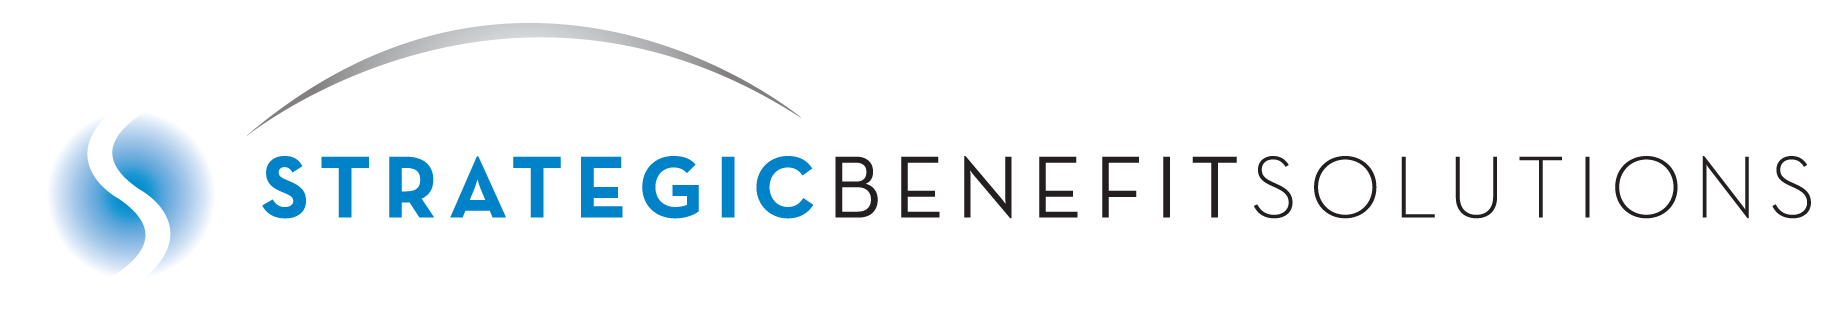 Strategic Benefit Solutions Logo